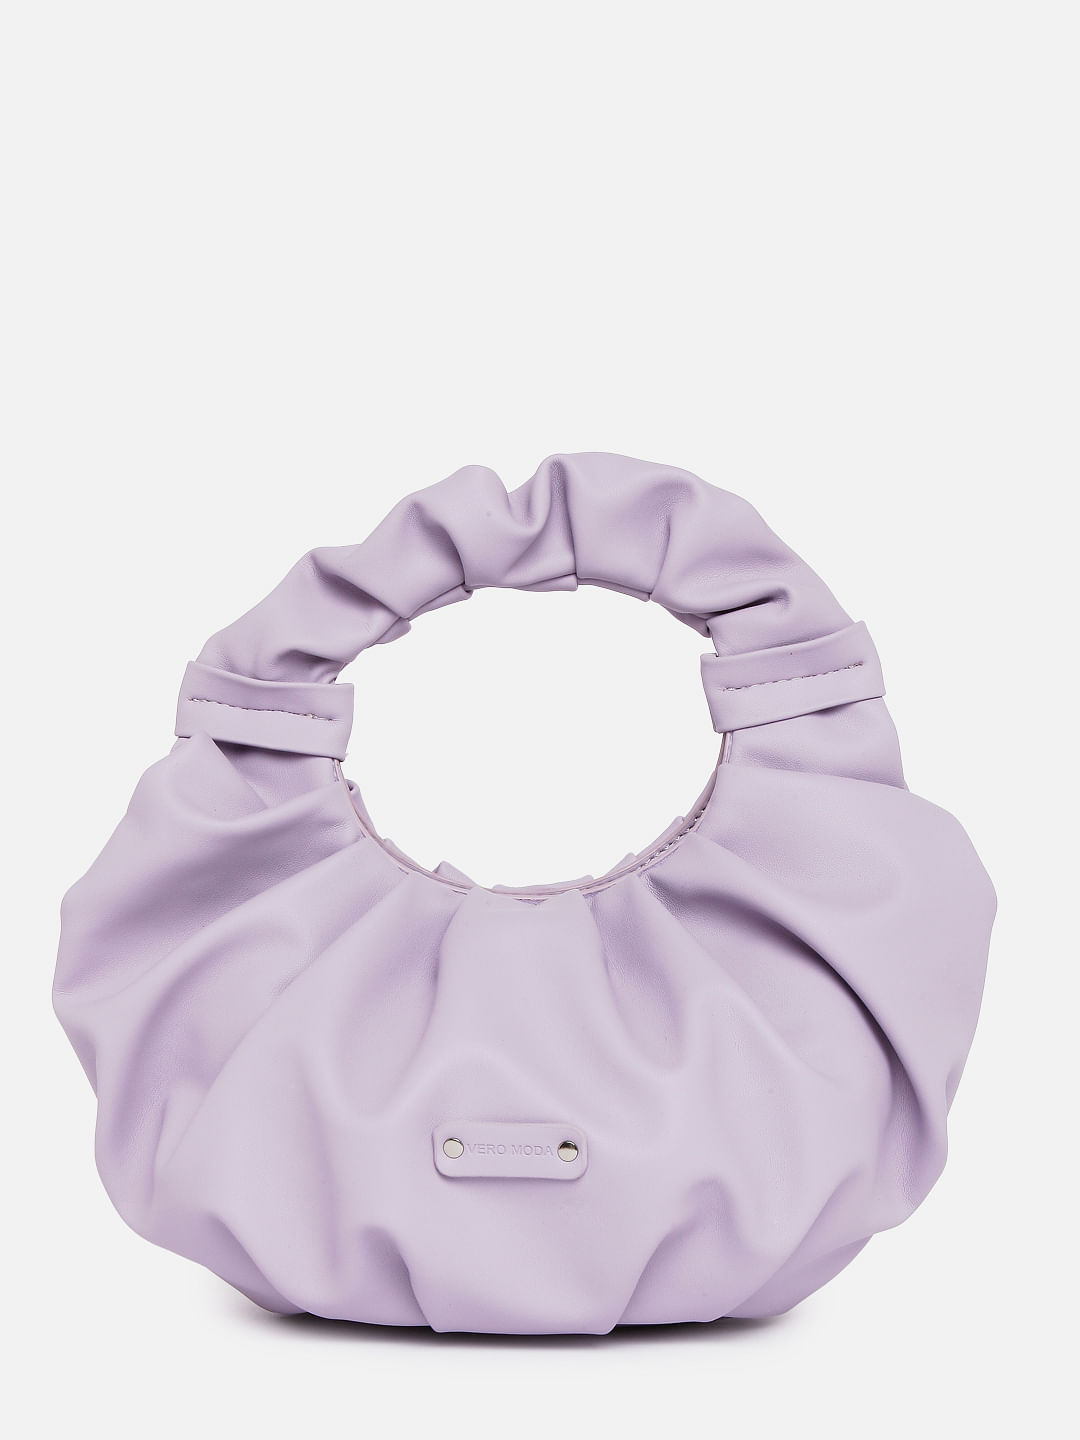 Womens Handbag  Shoulder Bags  Underarm Bag  Womens Bag  Purple Bag   Womens Bag Soft  Aliexpress